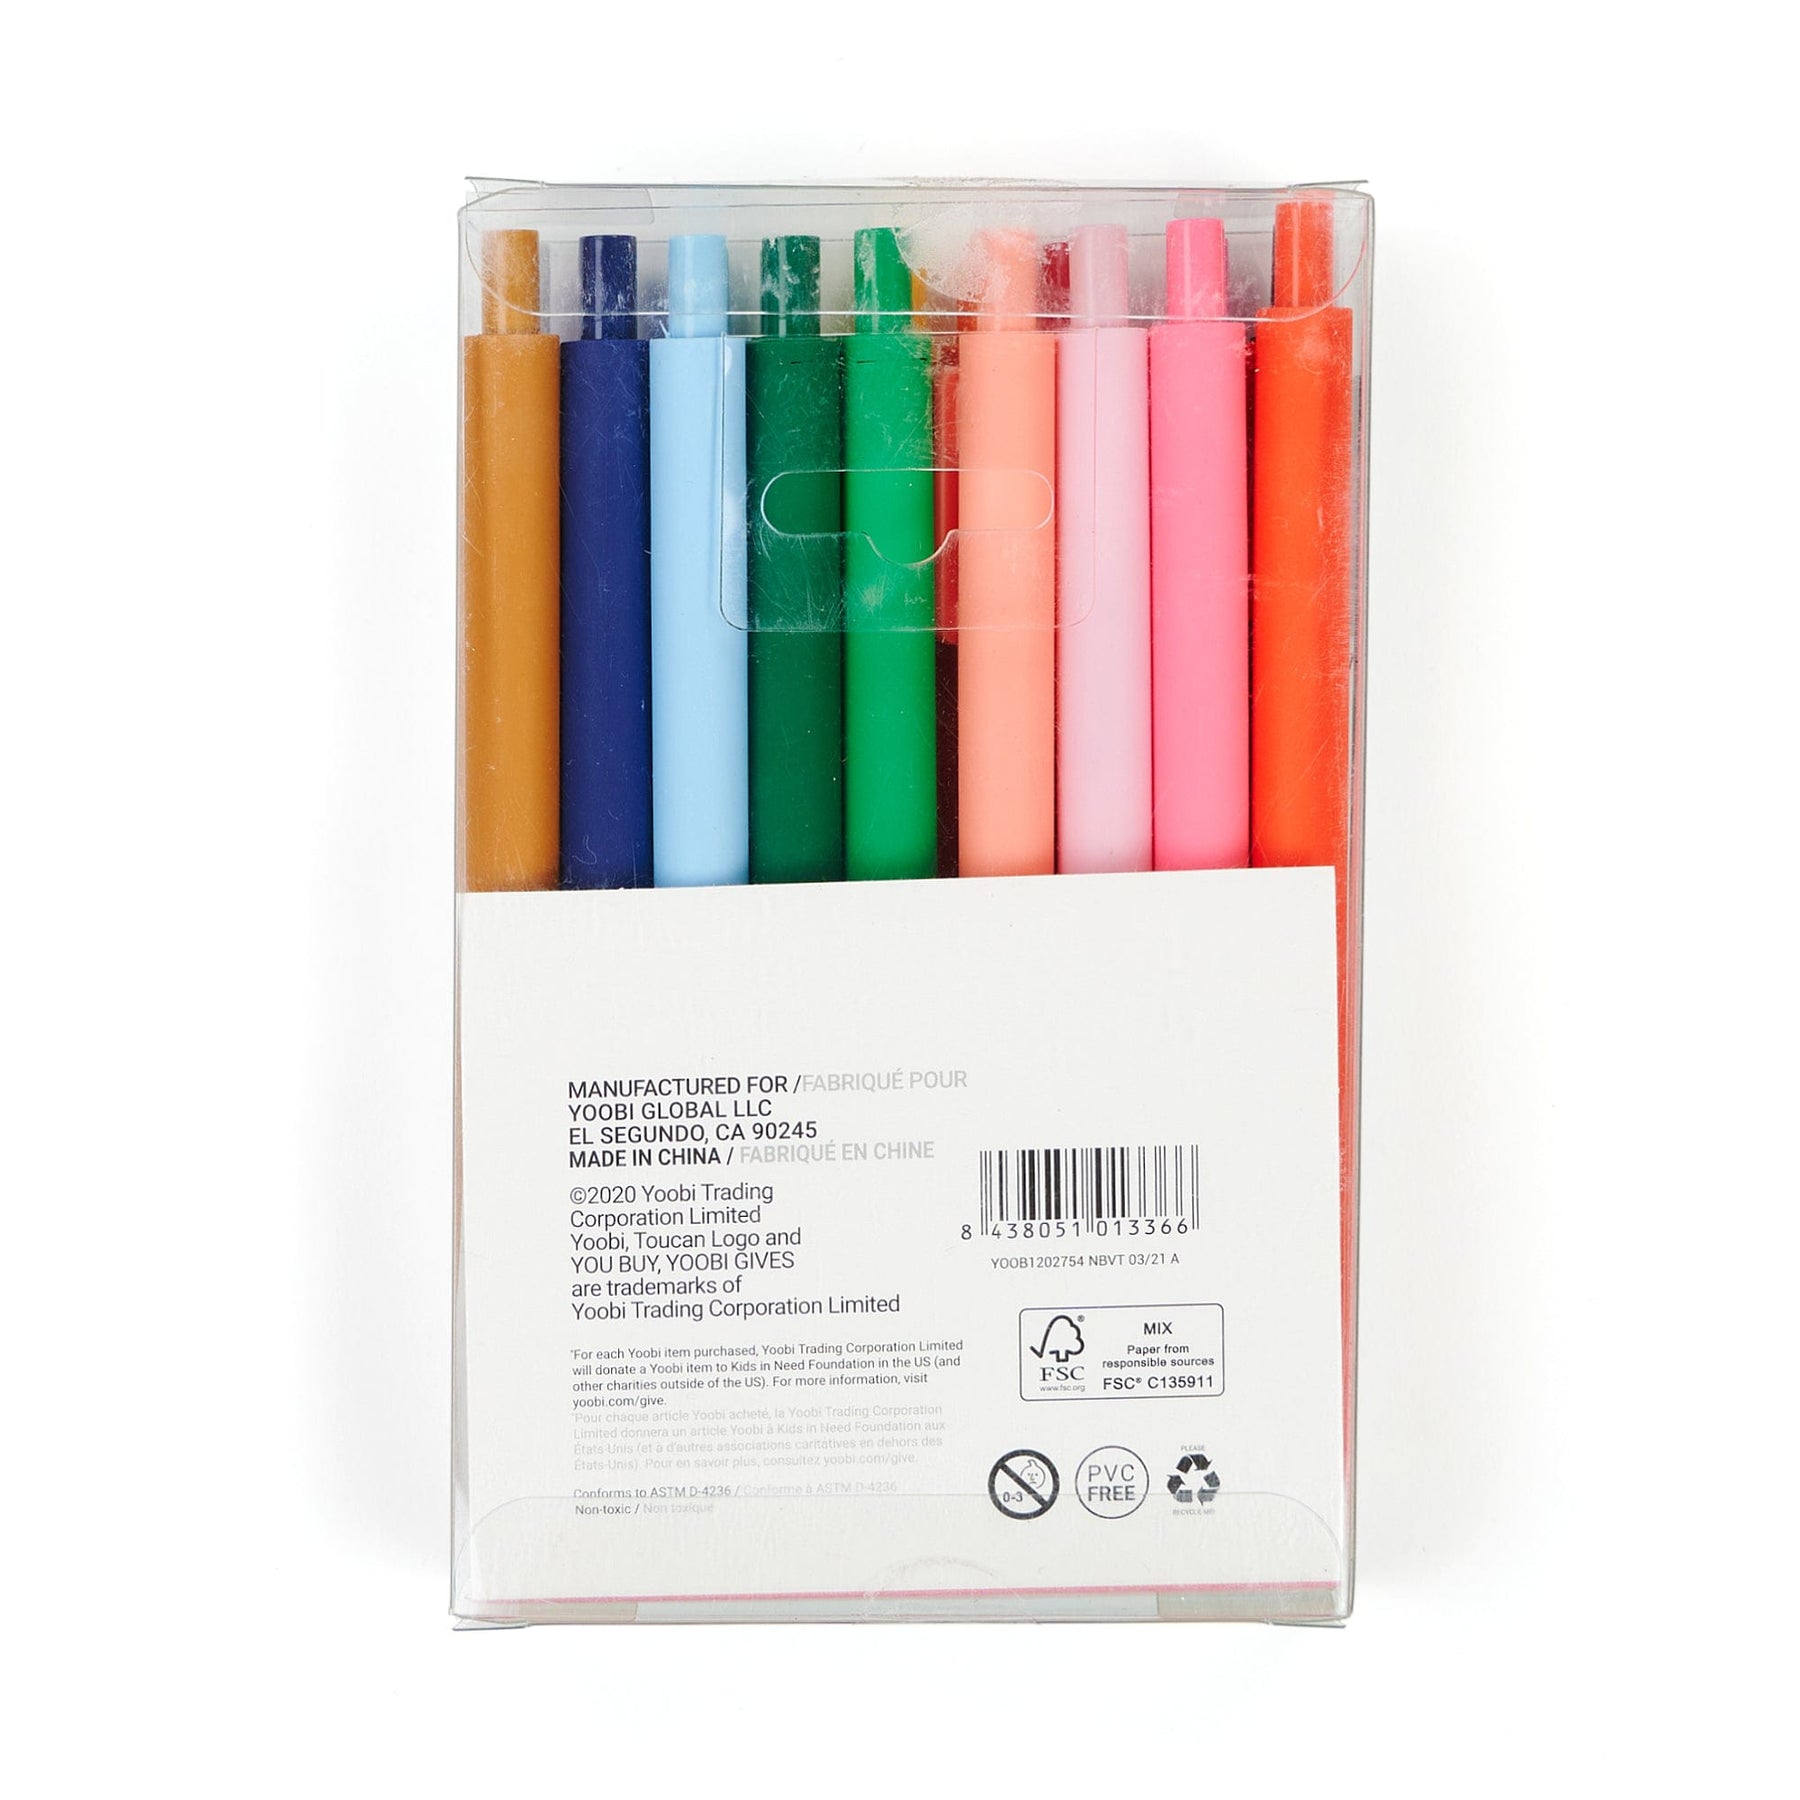 Yoobi Retractable Gel Pens, 18 Pack